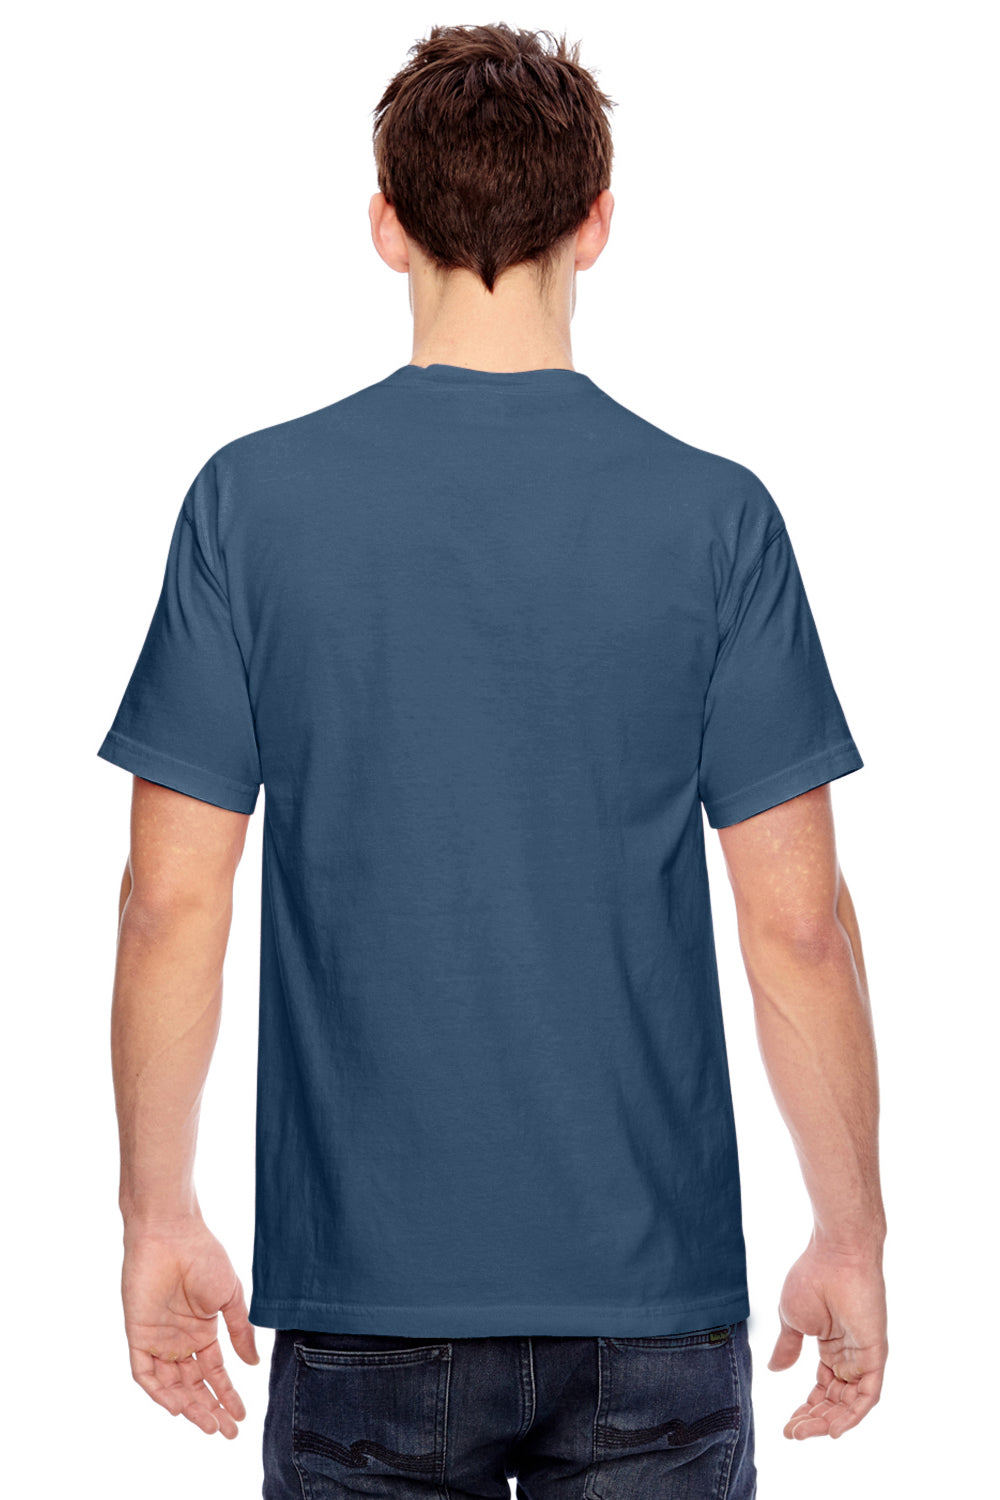 Comfort Colors C1717 Mens Short Sleeve Crewneck T-Shirt Navy Blue Back